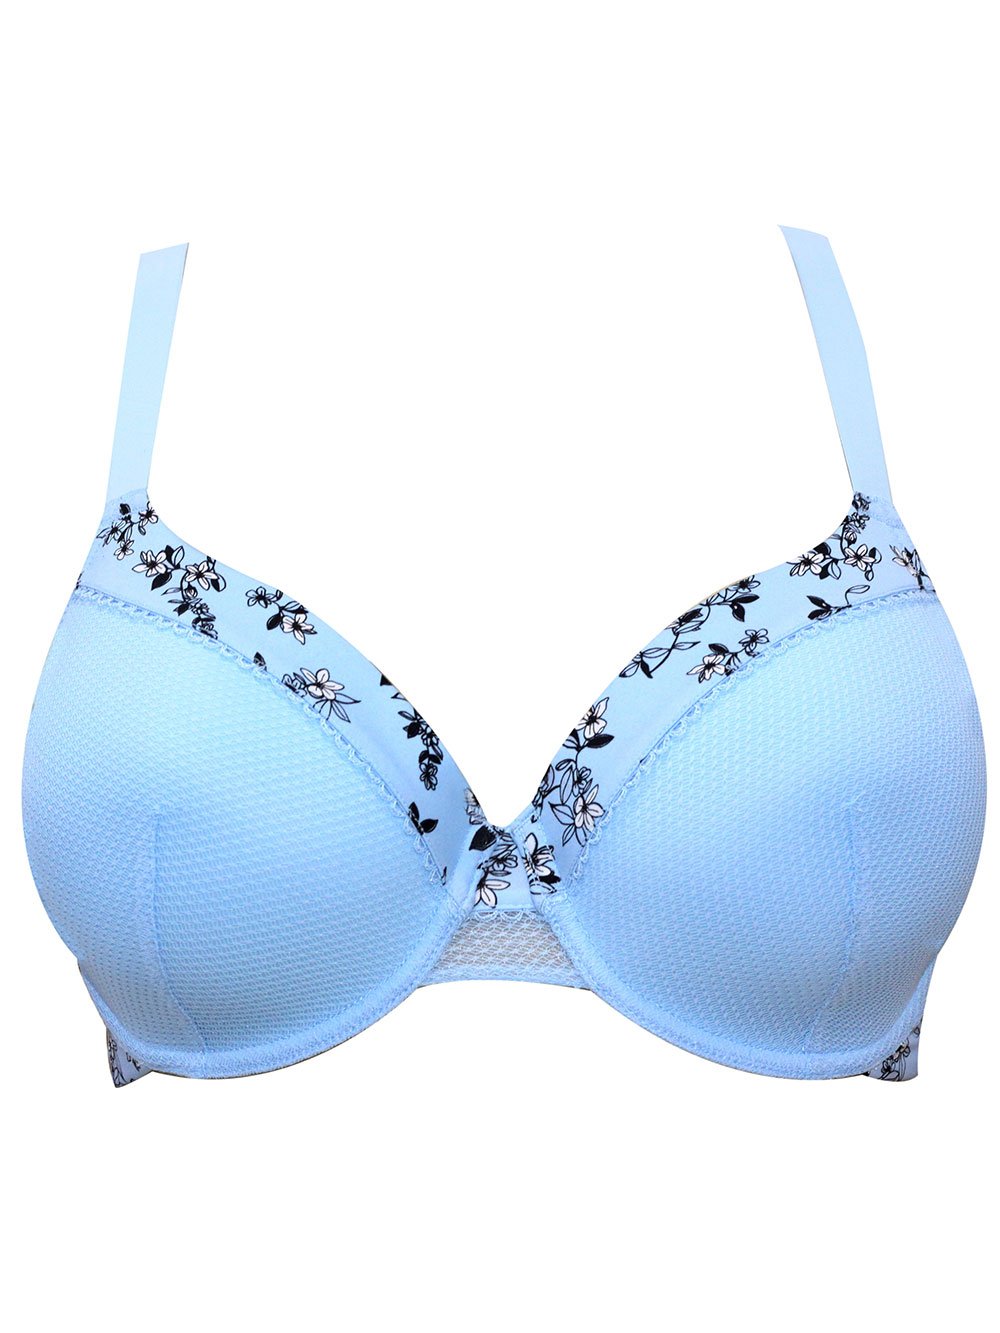 Ivy Contour Bandless Bra - Dream Blue With Floral Print - HauteFlair